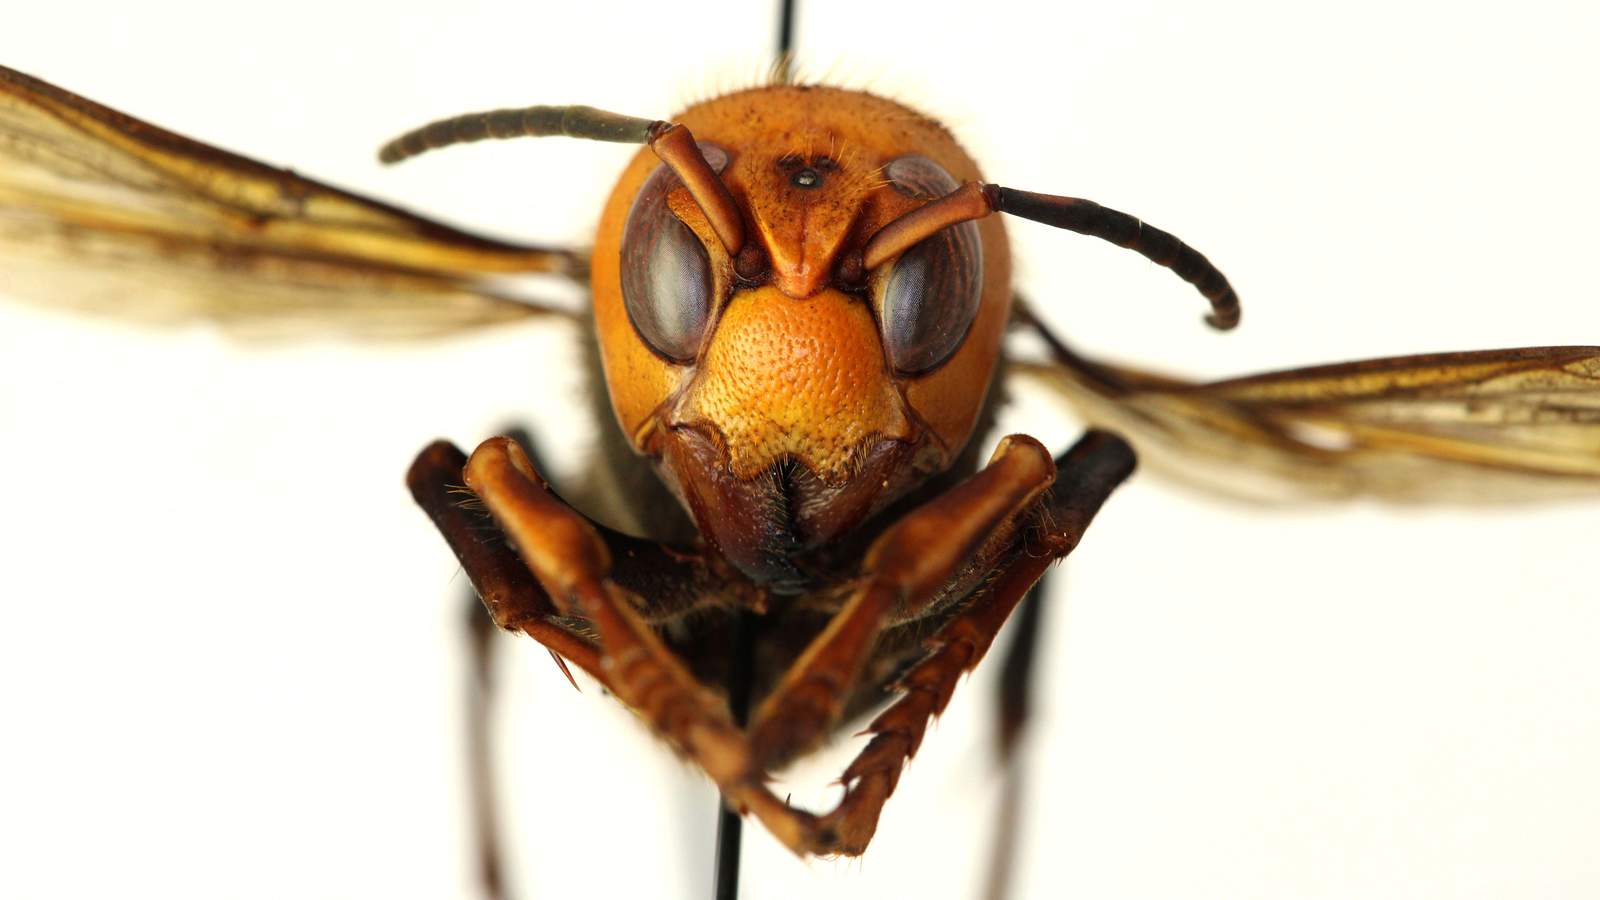 Florida has big hornets but not murder hornets, experts say